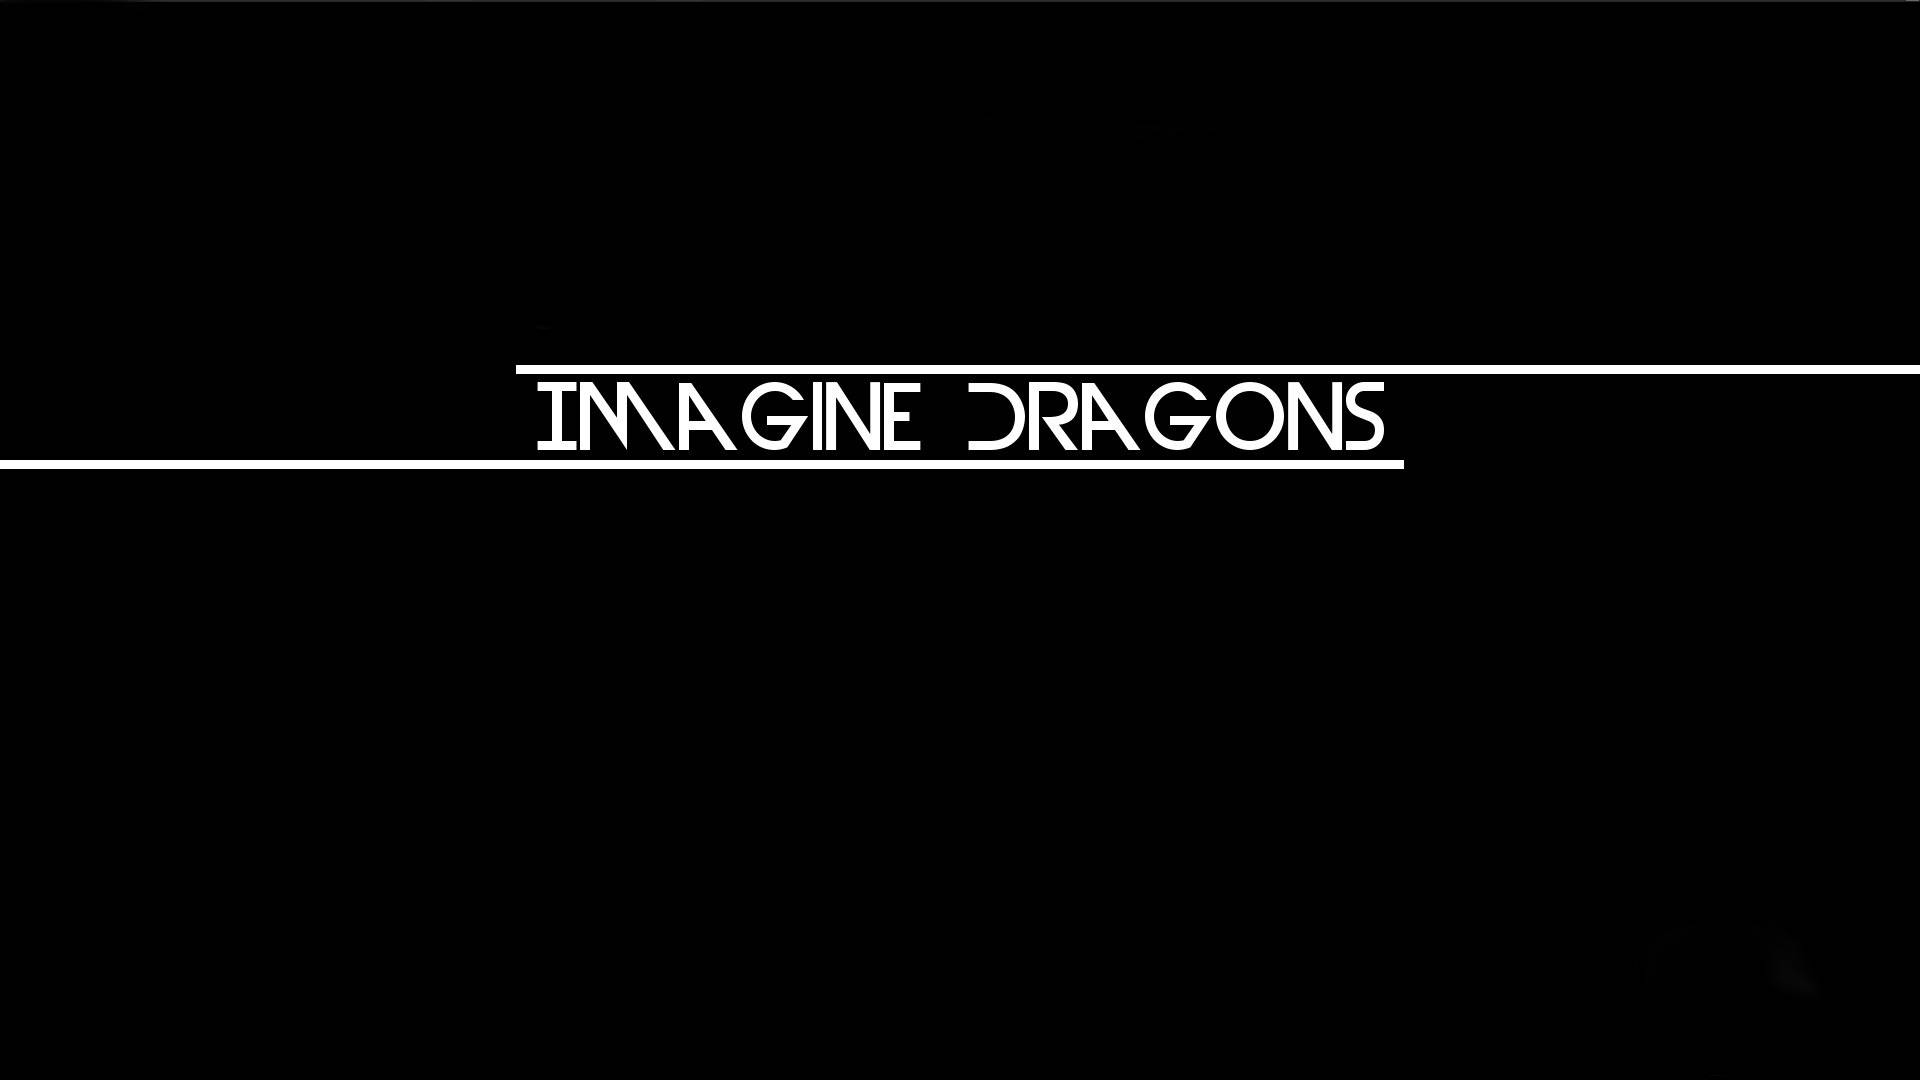 Imagine Dragons Wallpaper Images